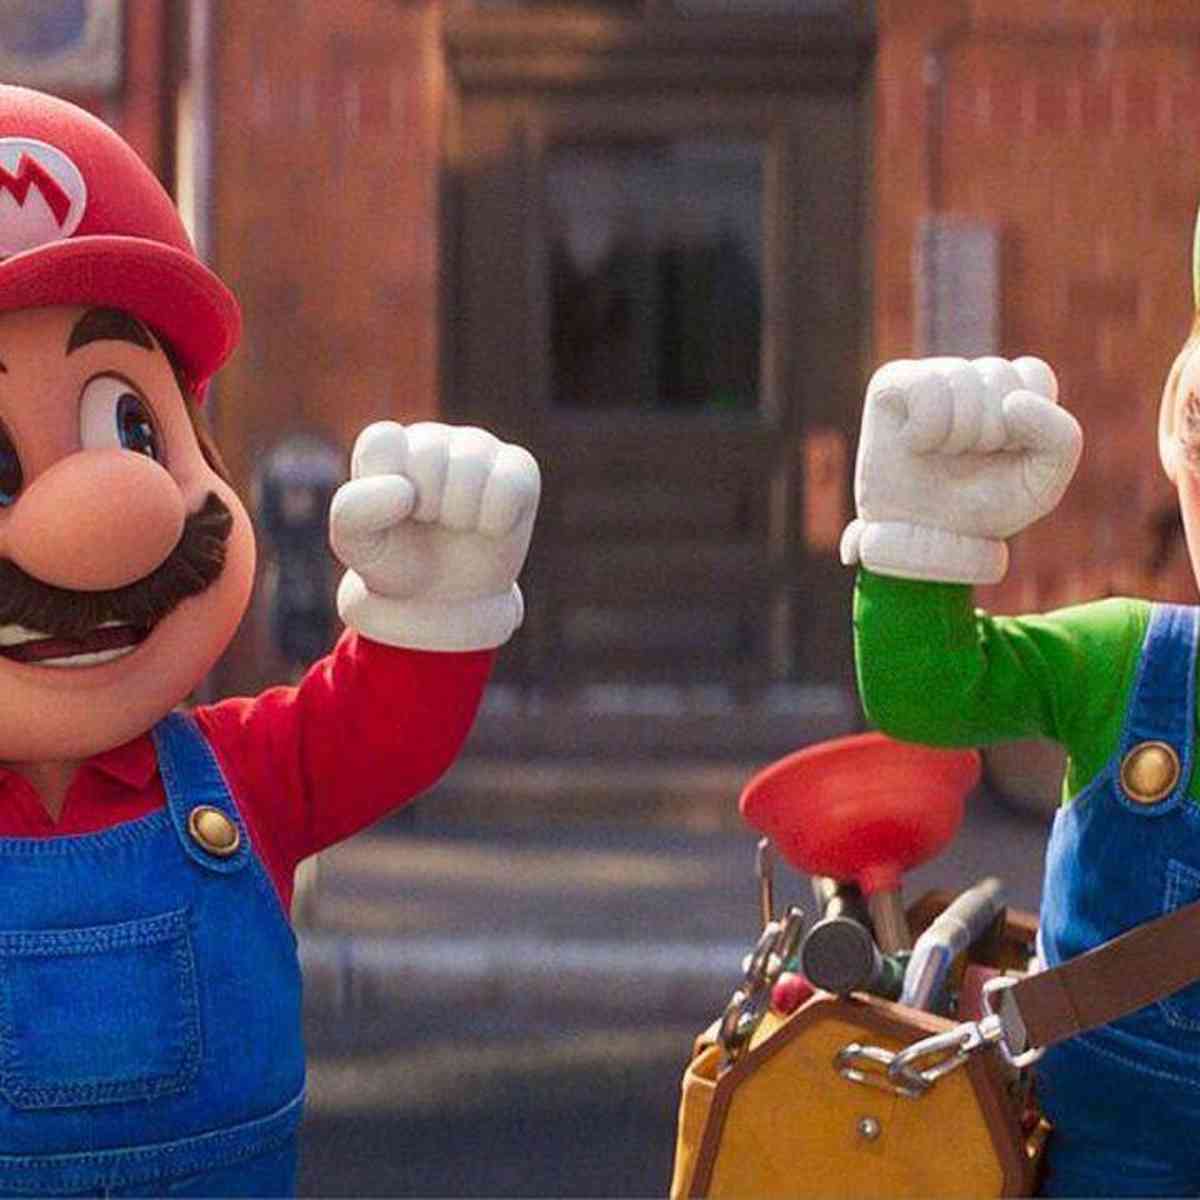 Super Mario Bros agora mira US$ 1 bi de bilheteria - Forbes